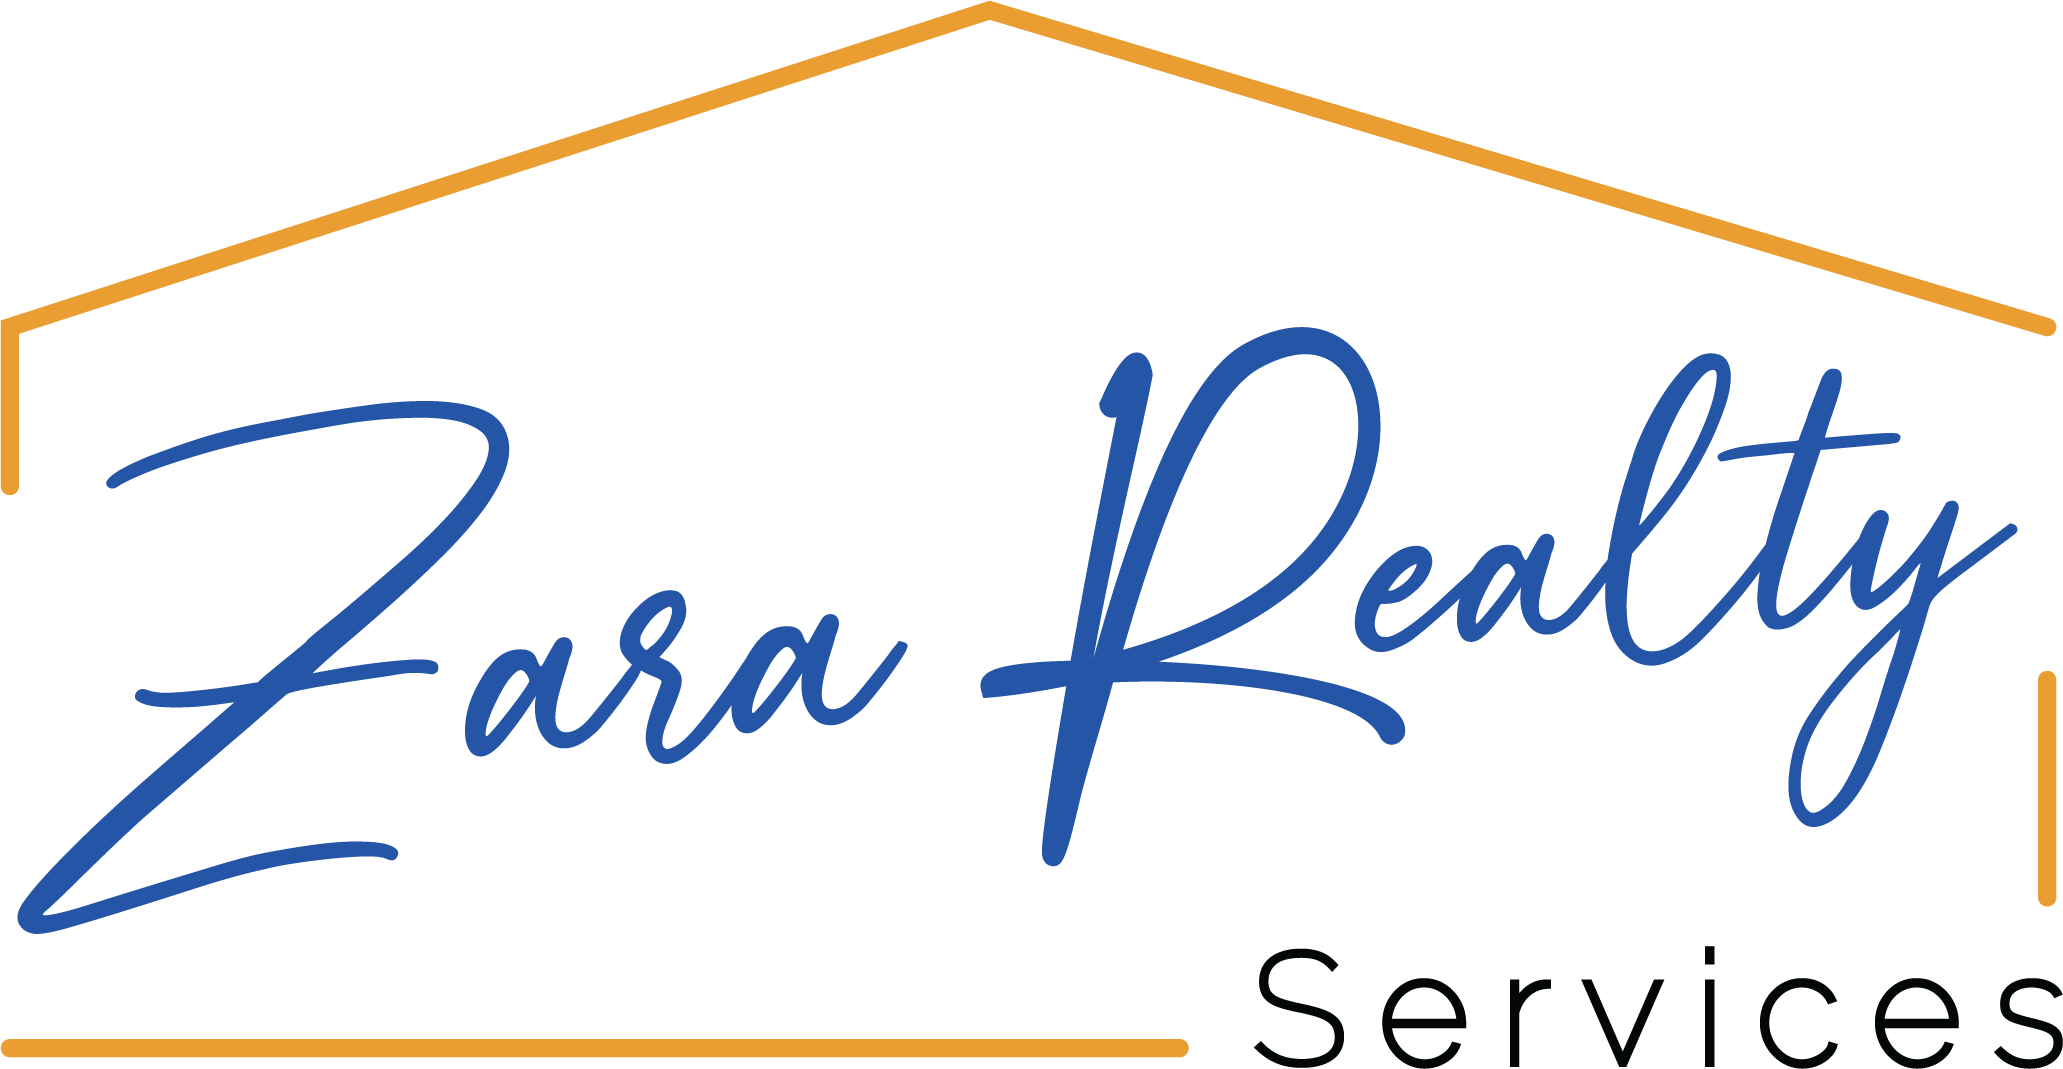 KERSTIN ZARA - Zara Realty Services